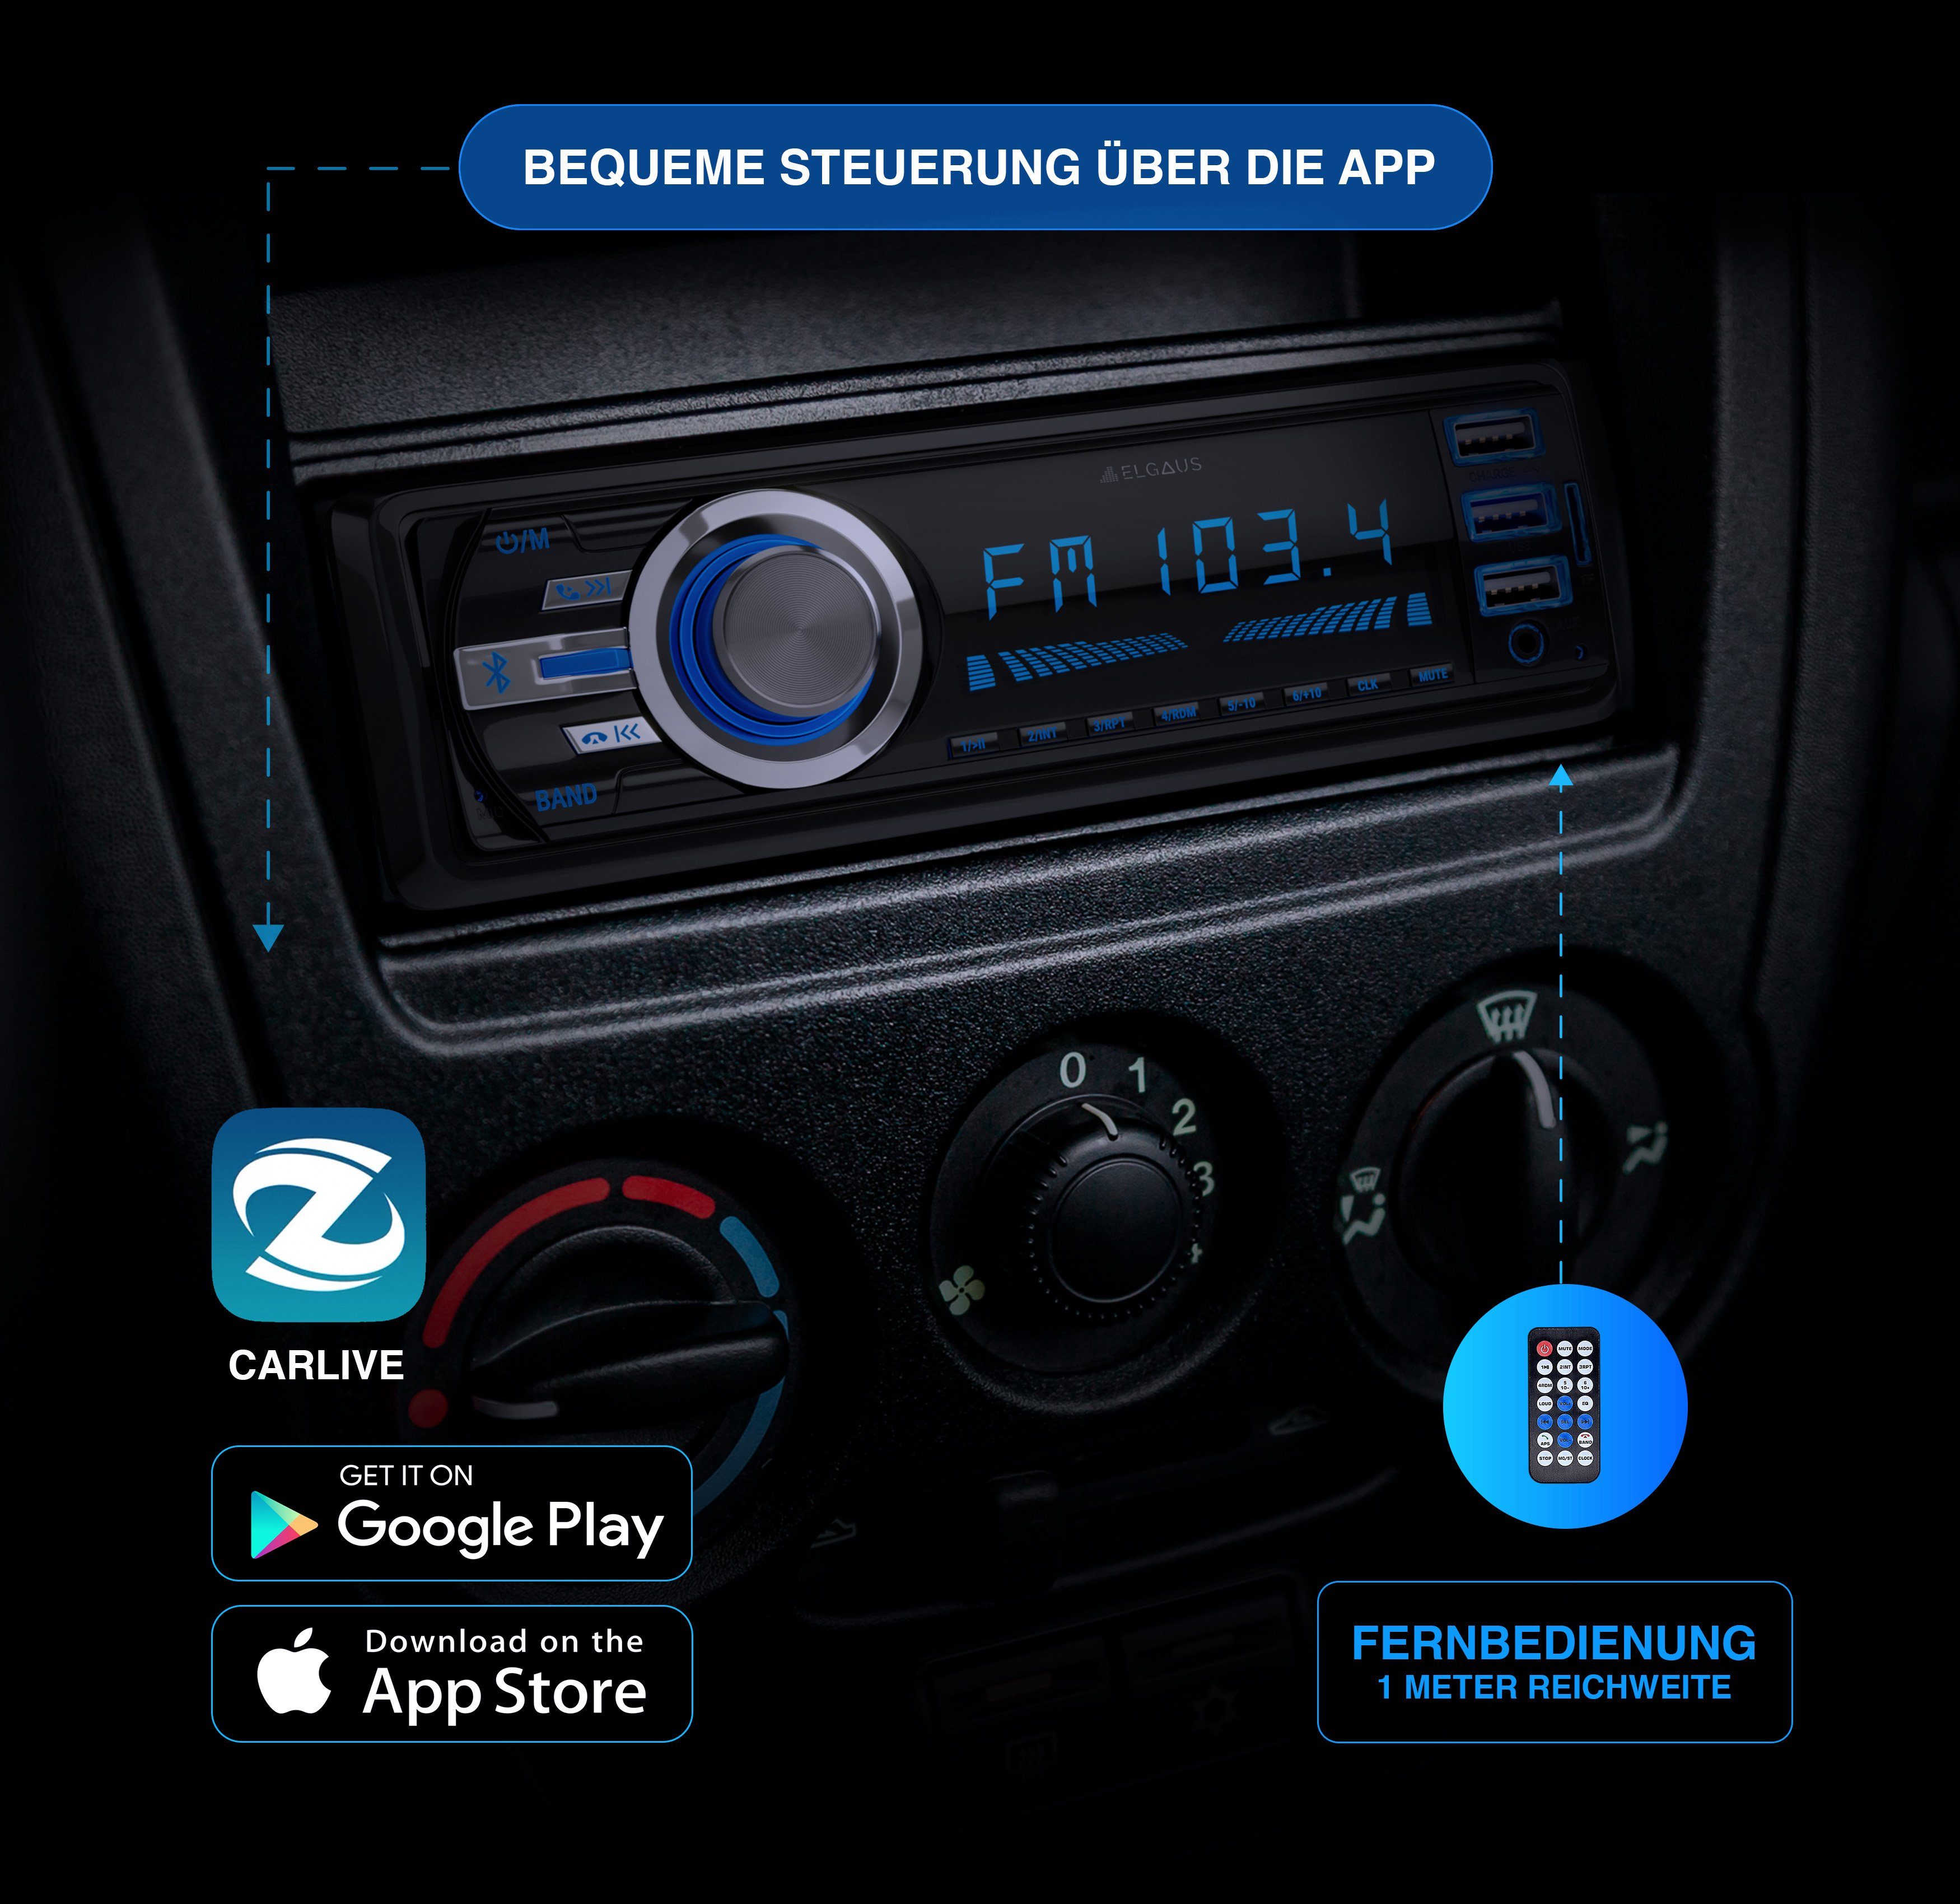 Manual Autoradio Bluetooth, ELGAUS Appsteuerung, OM-180P Fernbedienung, in DE/EN) ID3, RDS, (FM/AM, Din 1 RDS,